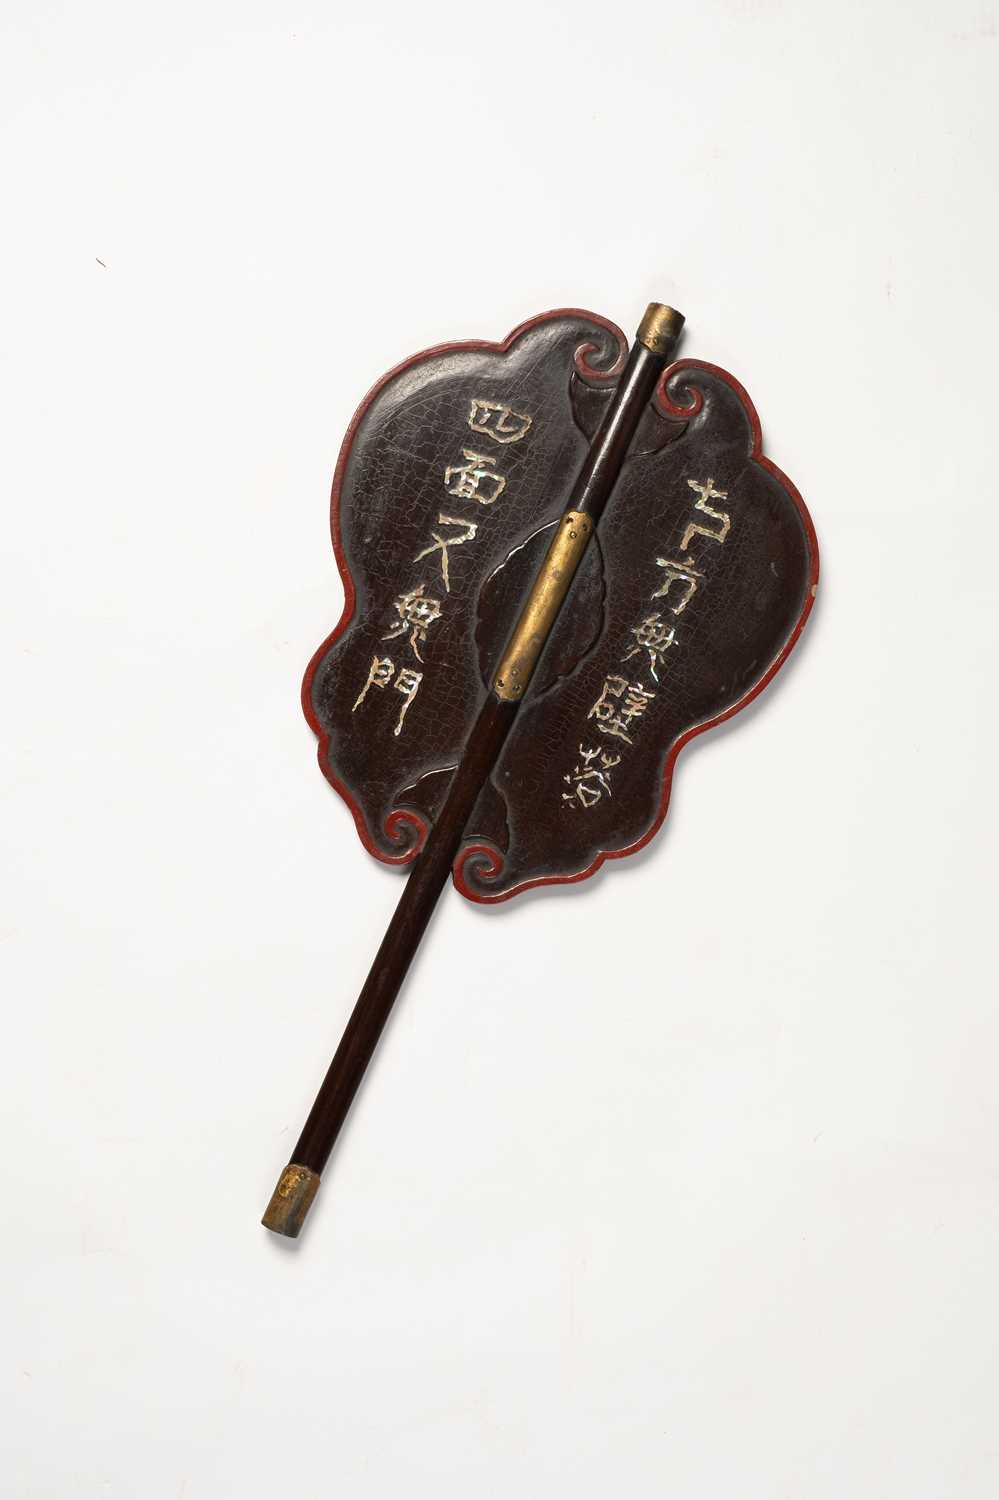 NO RESERVE A JAPANESE LACQUER GUNBAI UCHIWA (MILITARY FAN) MEIJI ERA, 19TH/20TH CENTURY With gilt